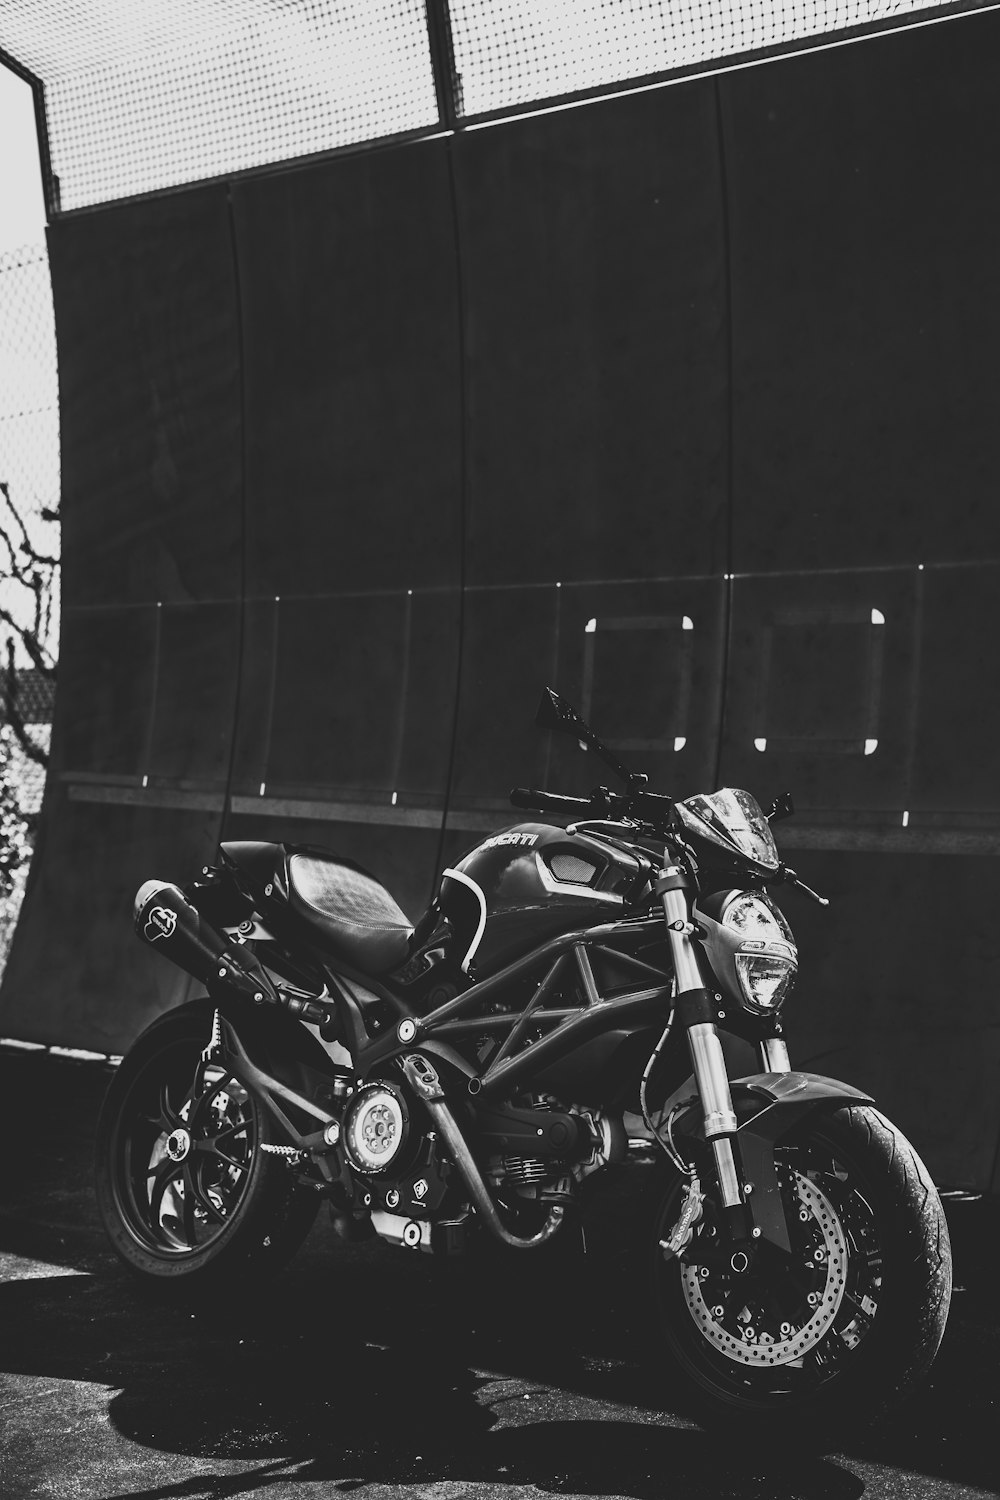 foto in scala di grigi di una motocicletta nera